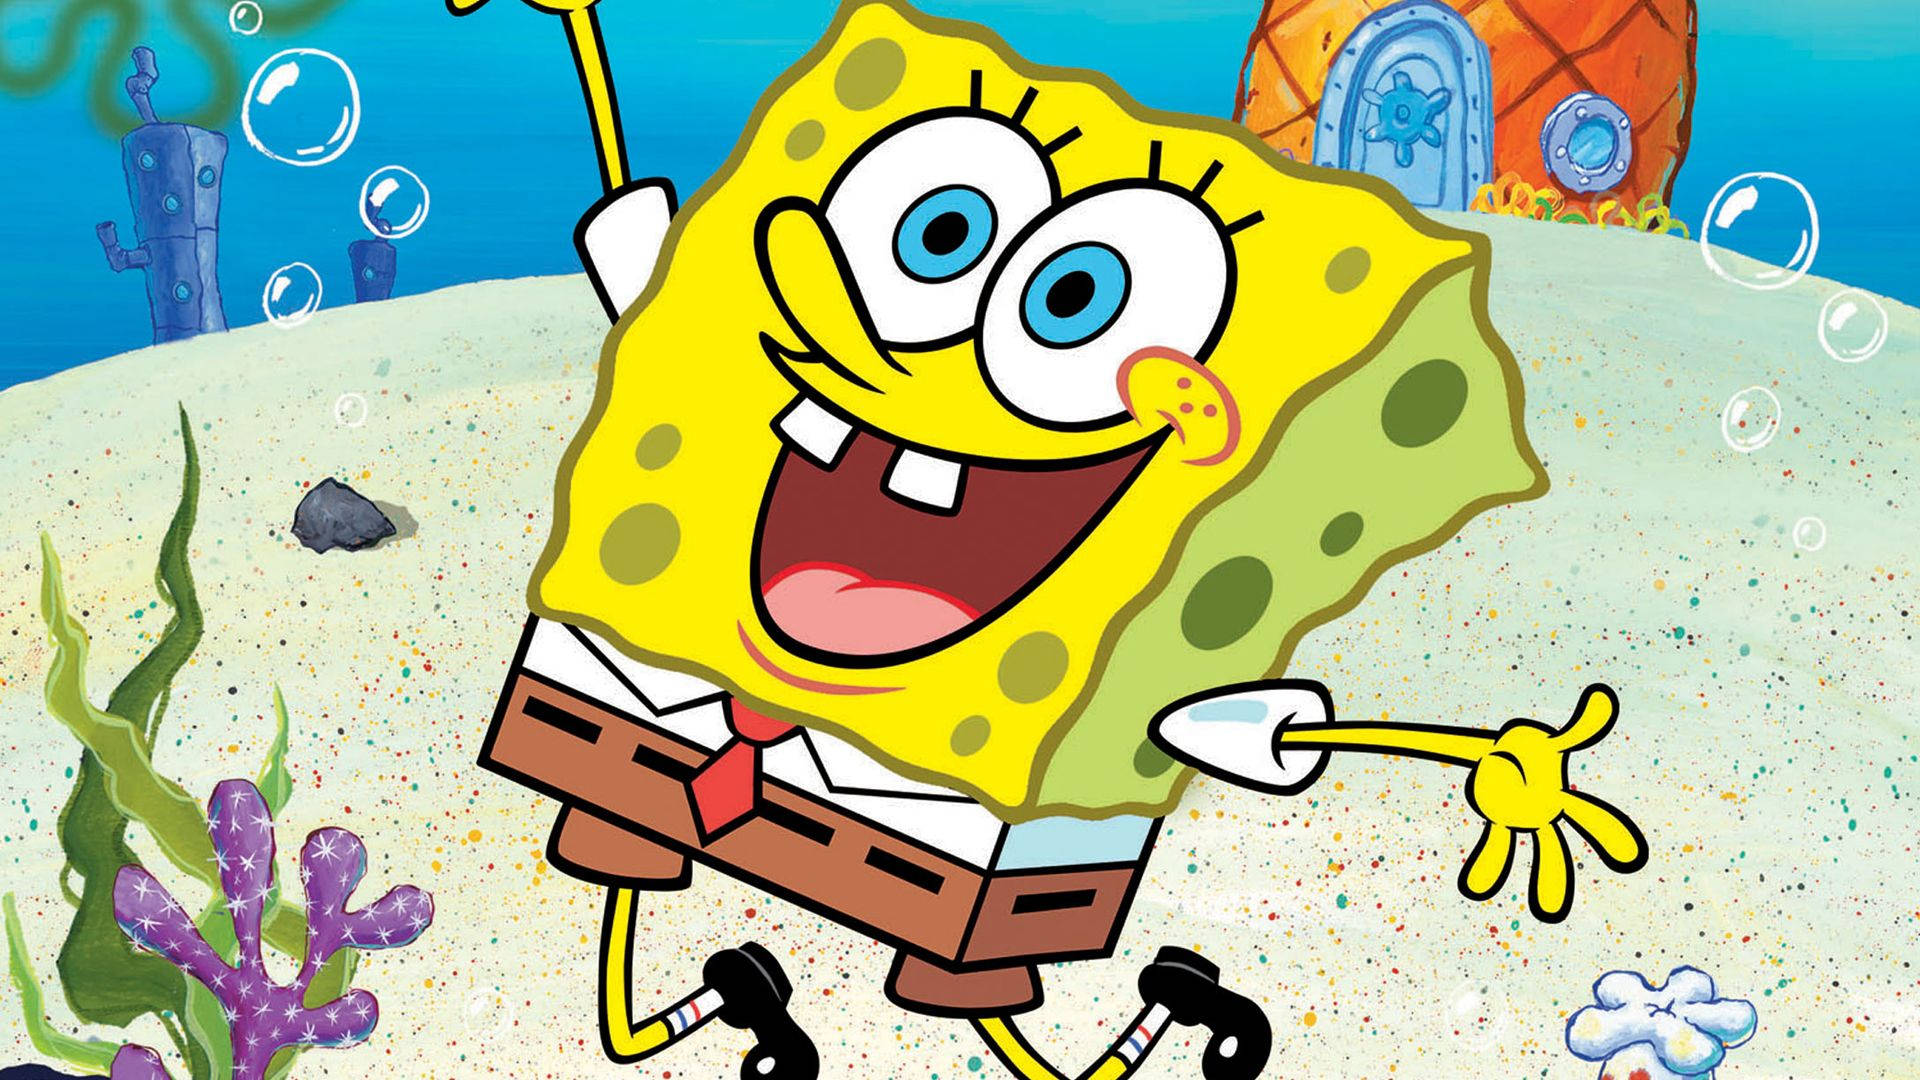 Free Spongebob Wallpaper Downloads, Spongebob Wallpaper for FREE